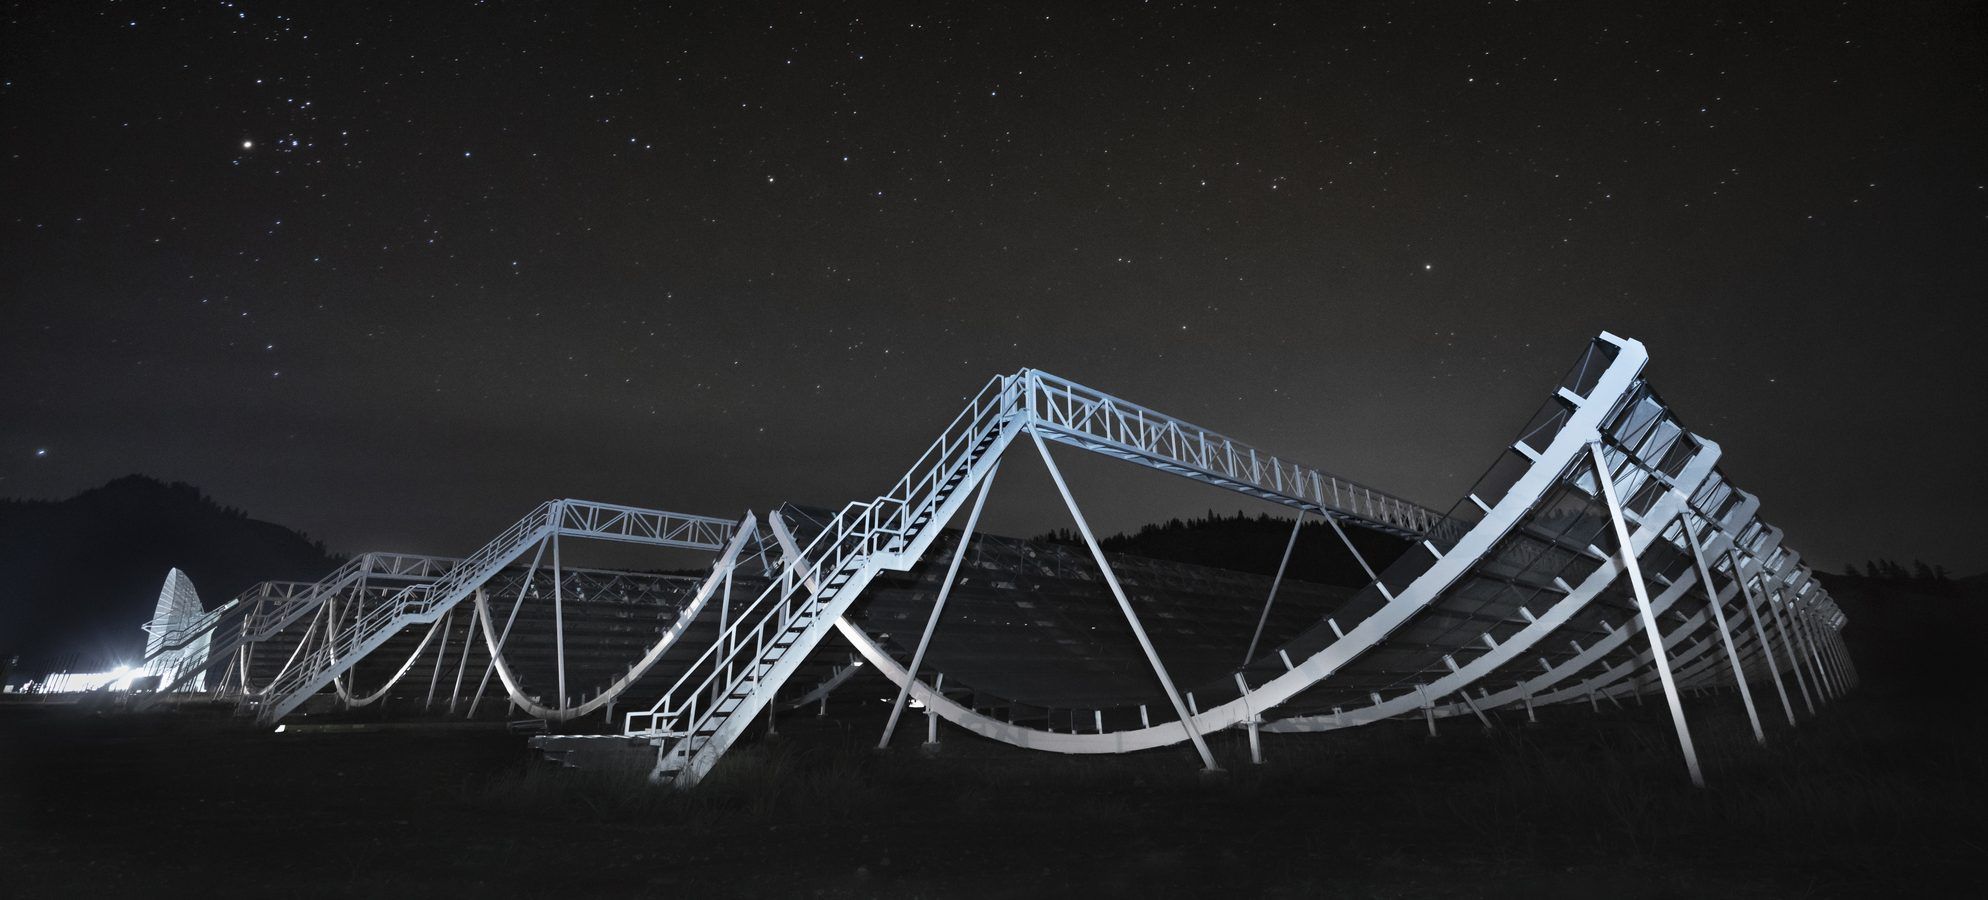 Massive telescope under a starry sky